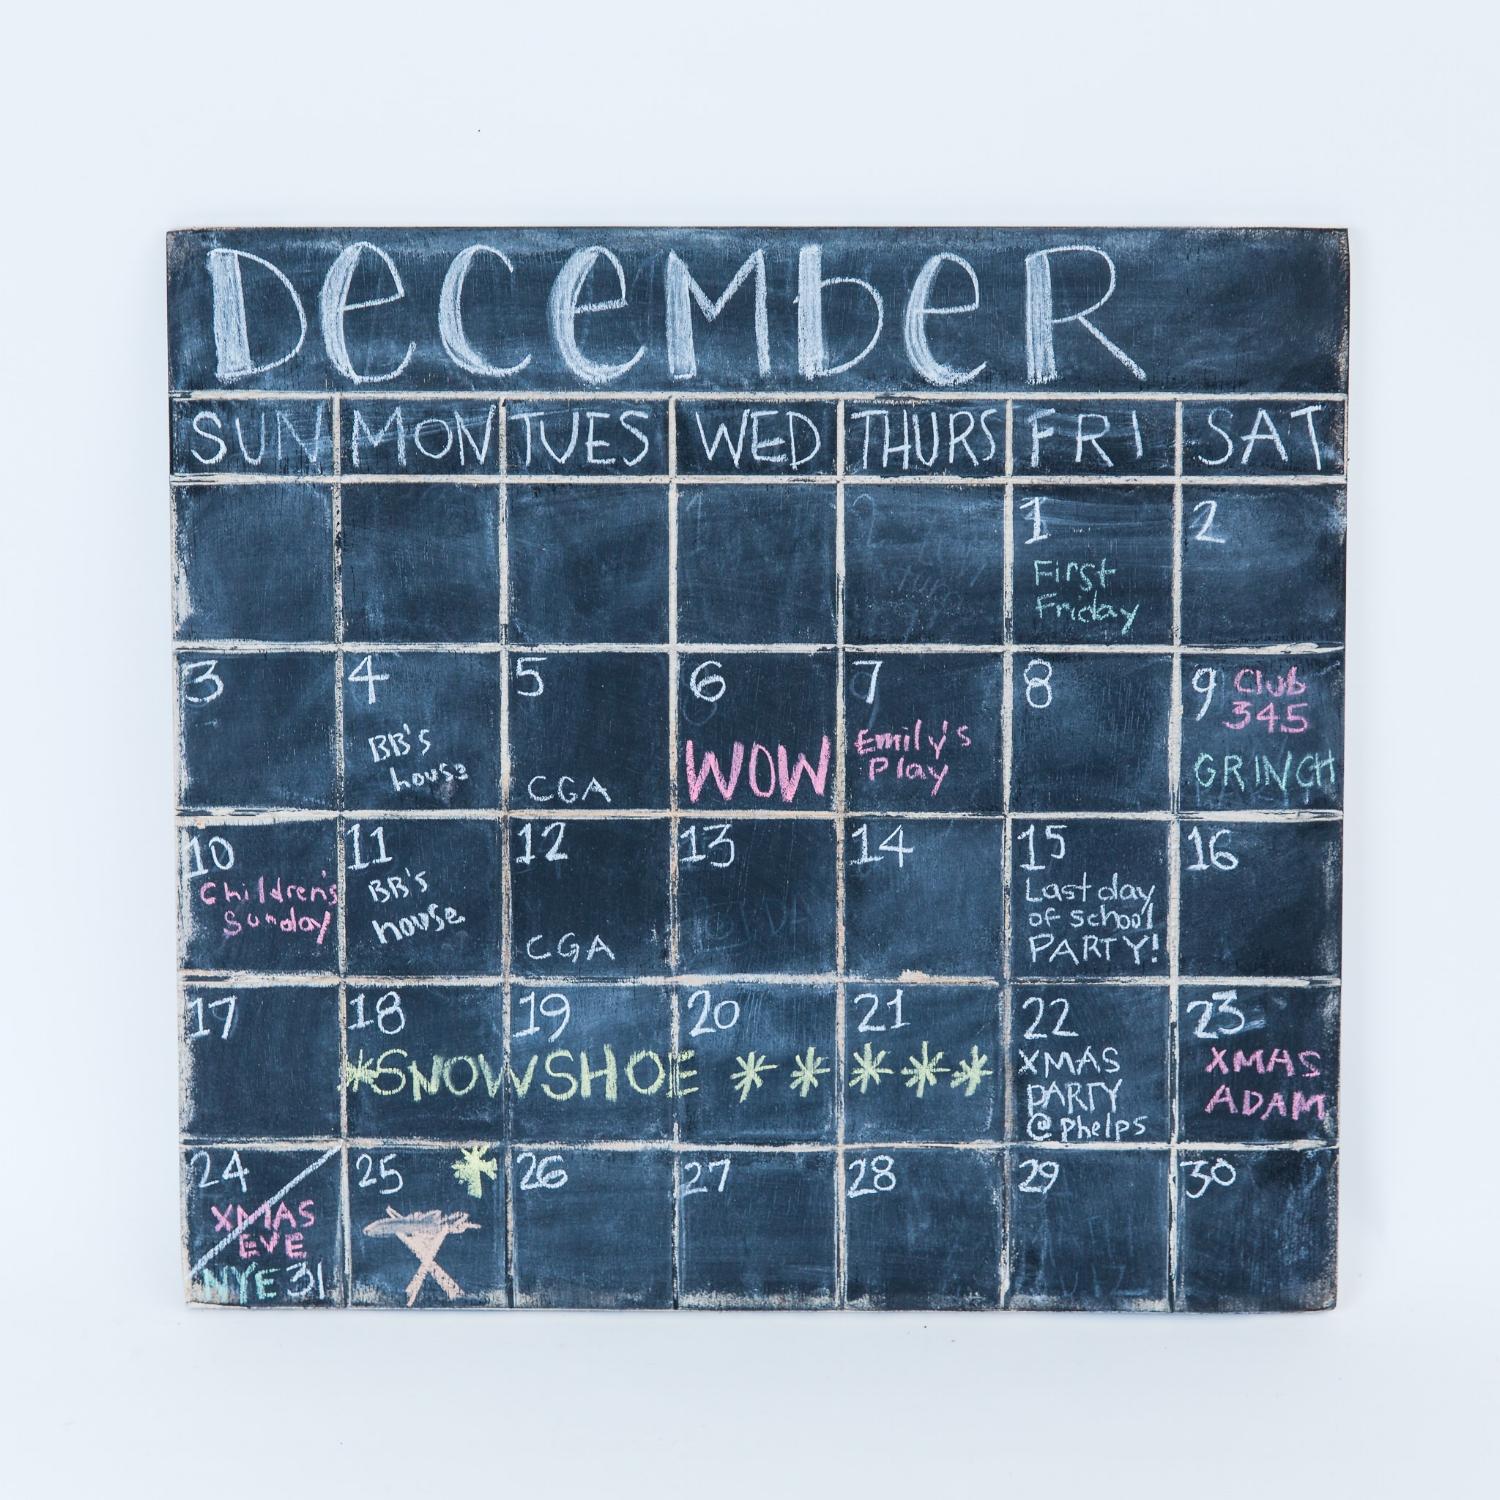 Engraved Chalkboard Calendar